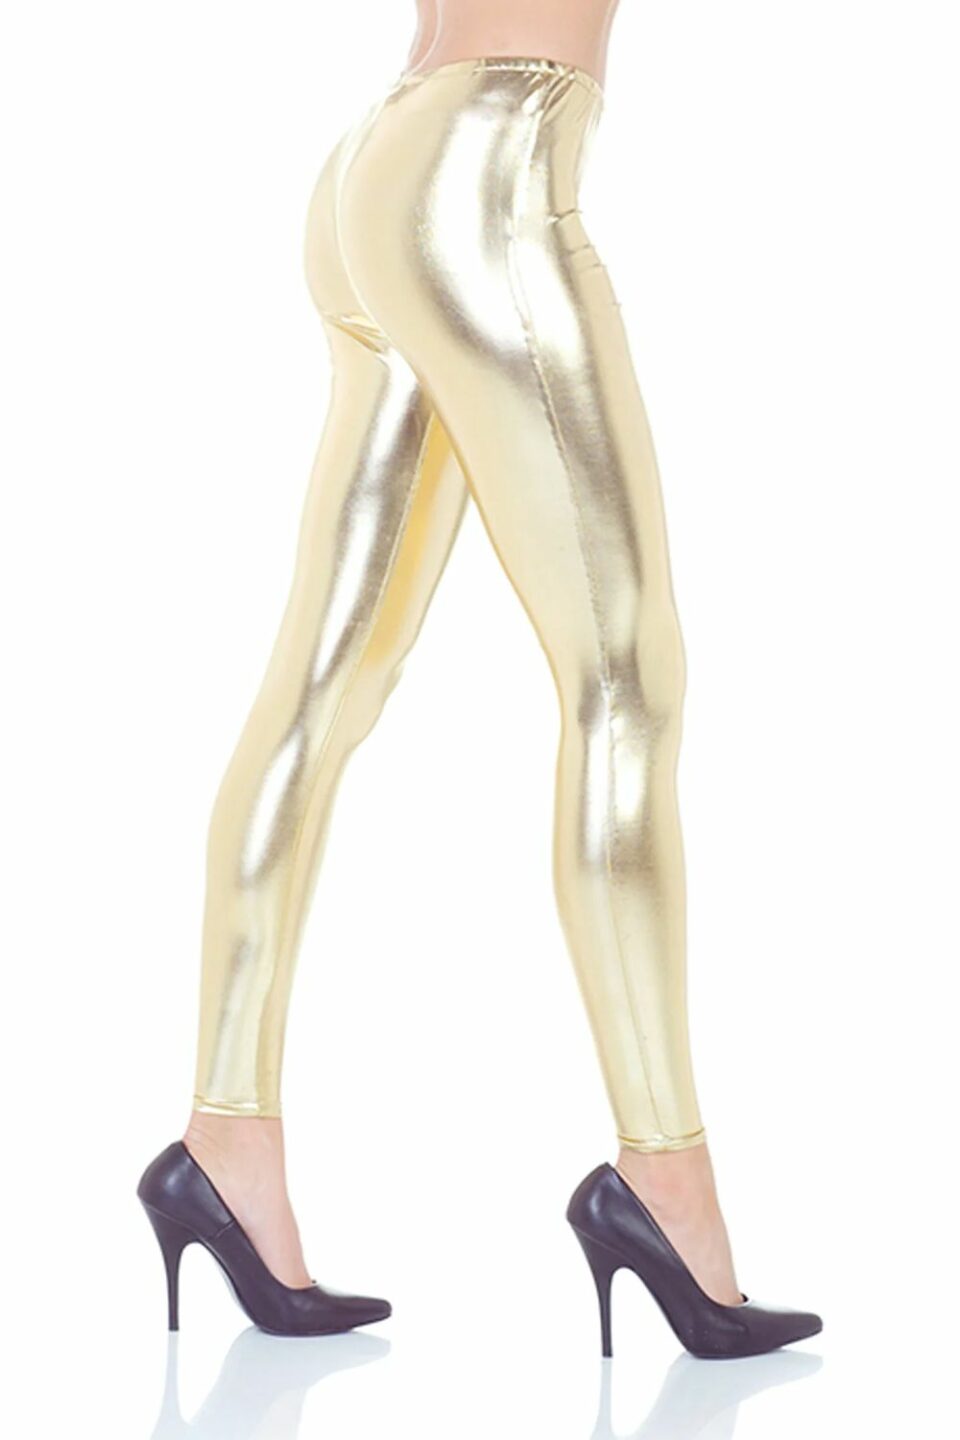 Buy Janvii Gold Patch Designer Leggings Online @ ₹345 from ShopClues